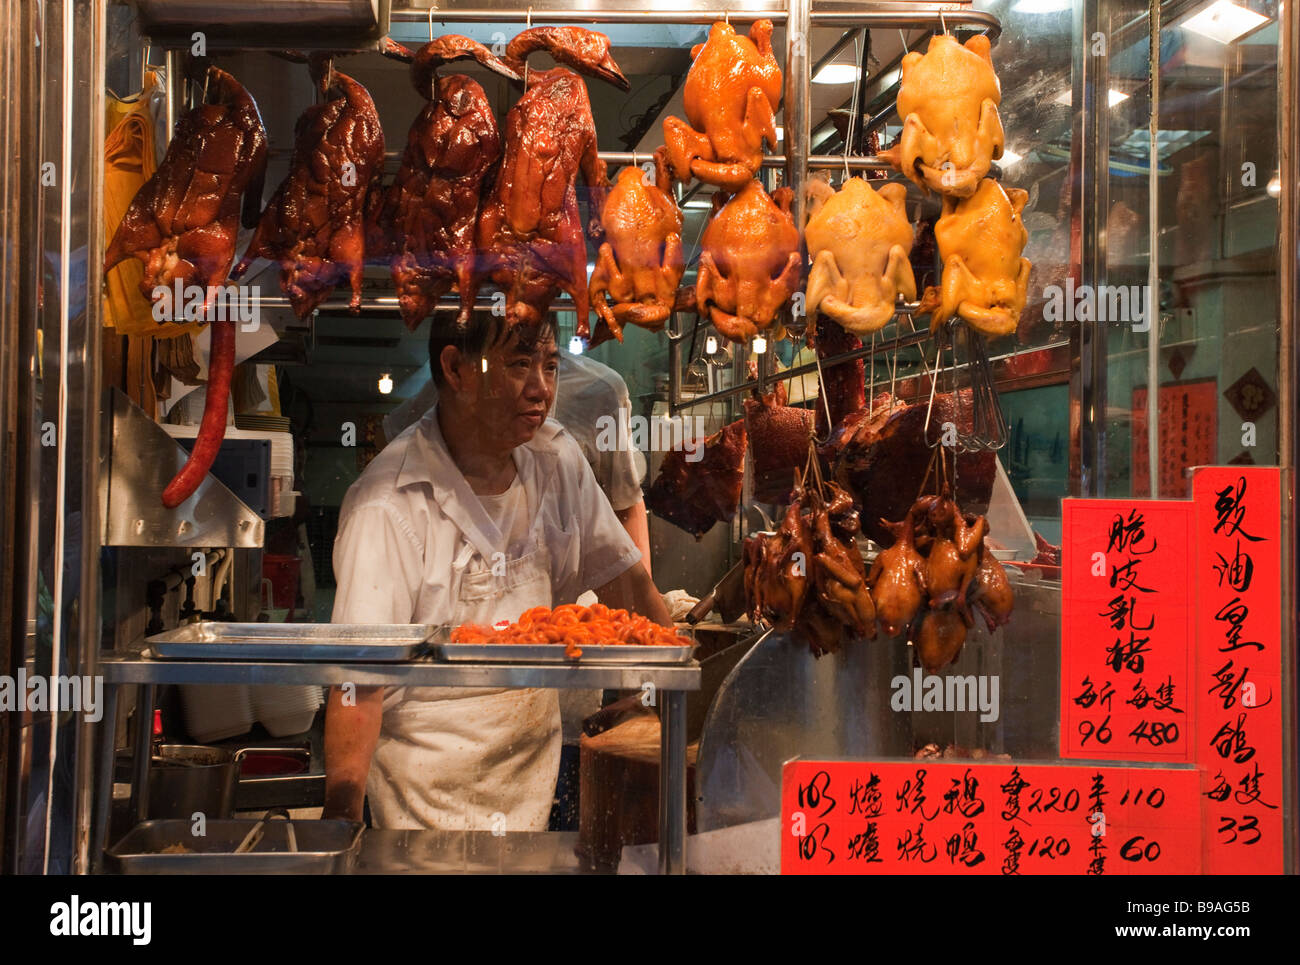 Peking duck on sale Hong Kong Stock Photo